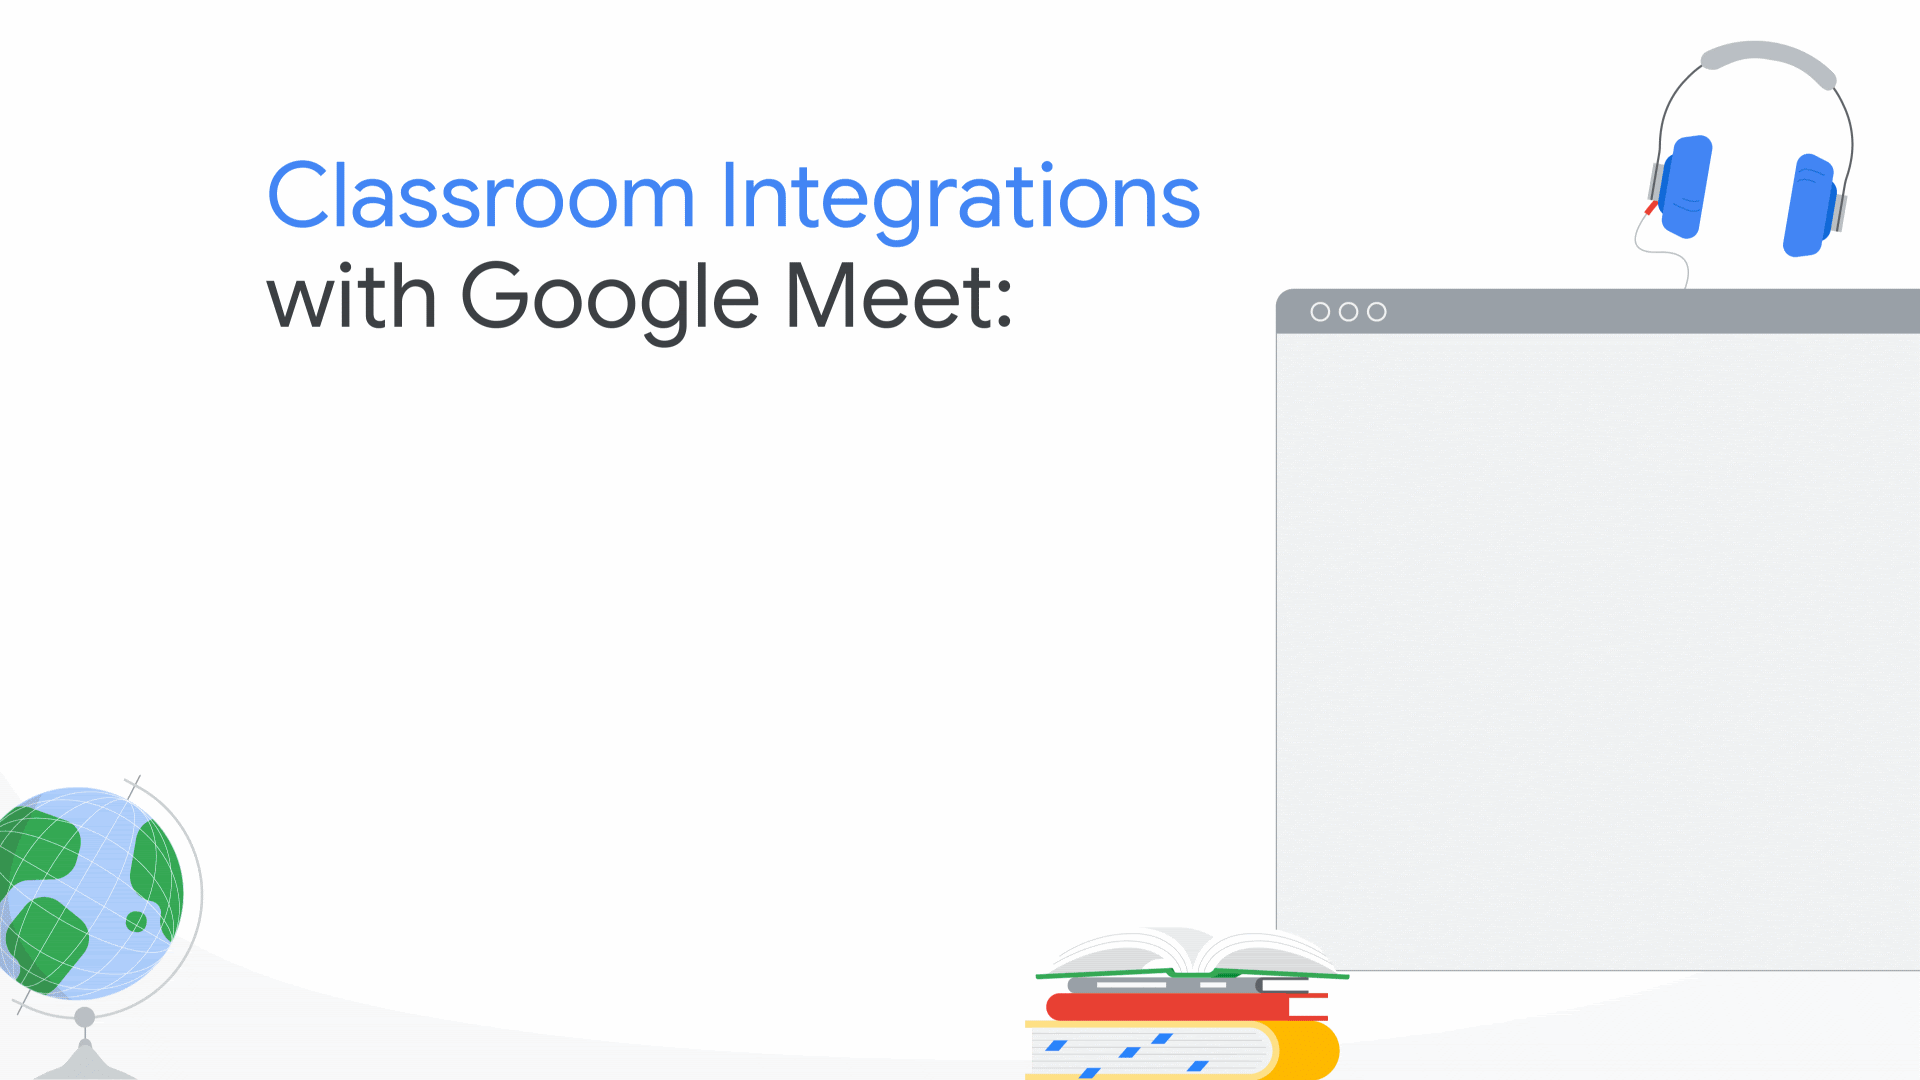 Classroom integrations with Google Meet